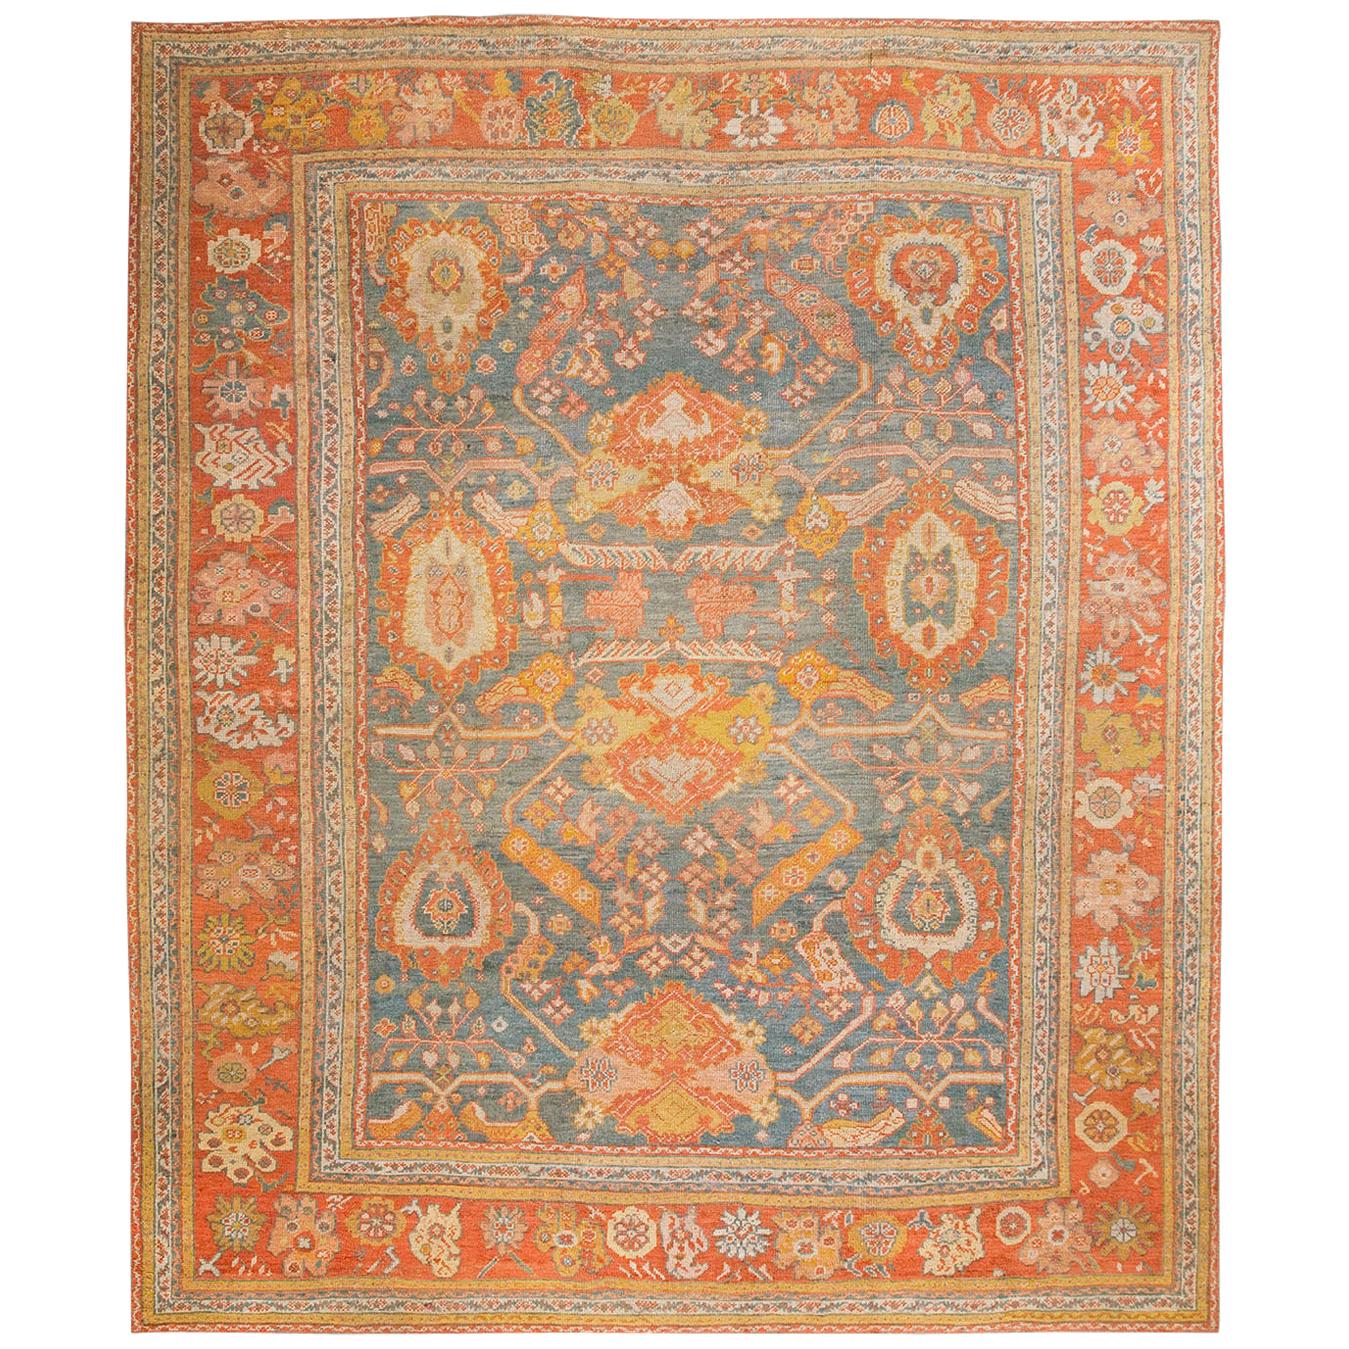 Antique Turksih Oushak Carpet From 1880s ( 11'10" x 14'2" - 360 x 431 cm )